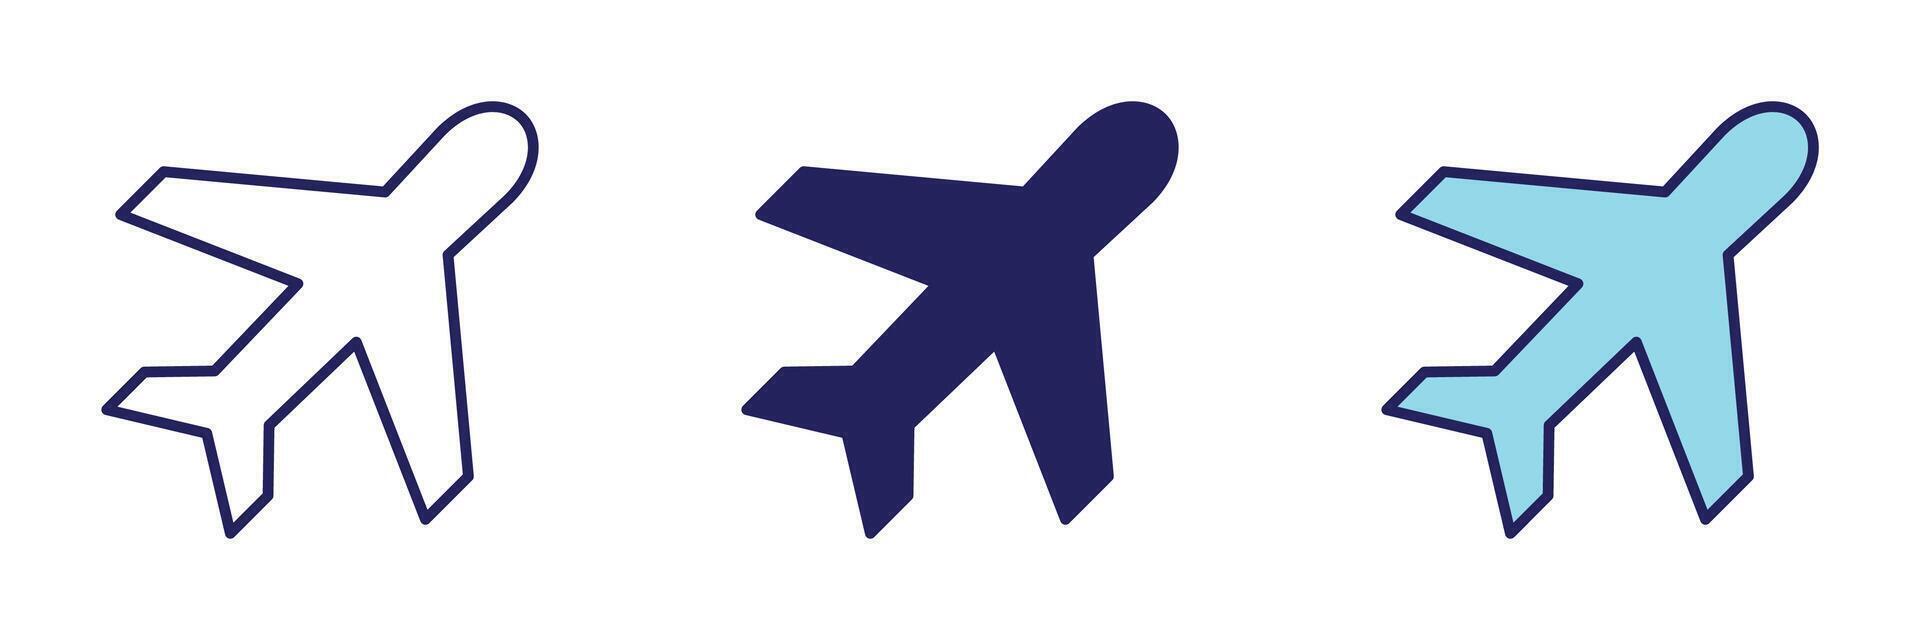 Plane Transportation Icon - Navigation Set vector